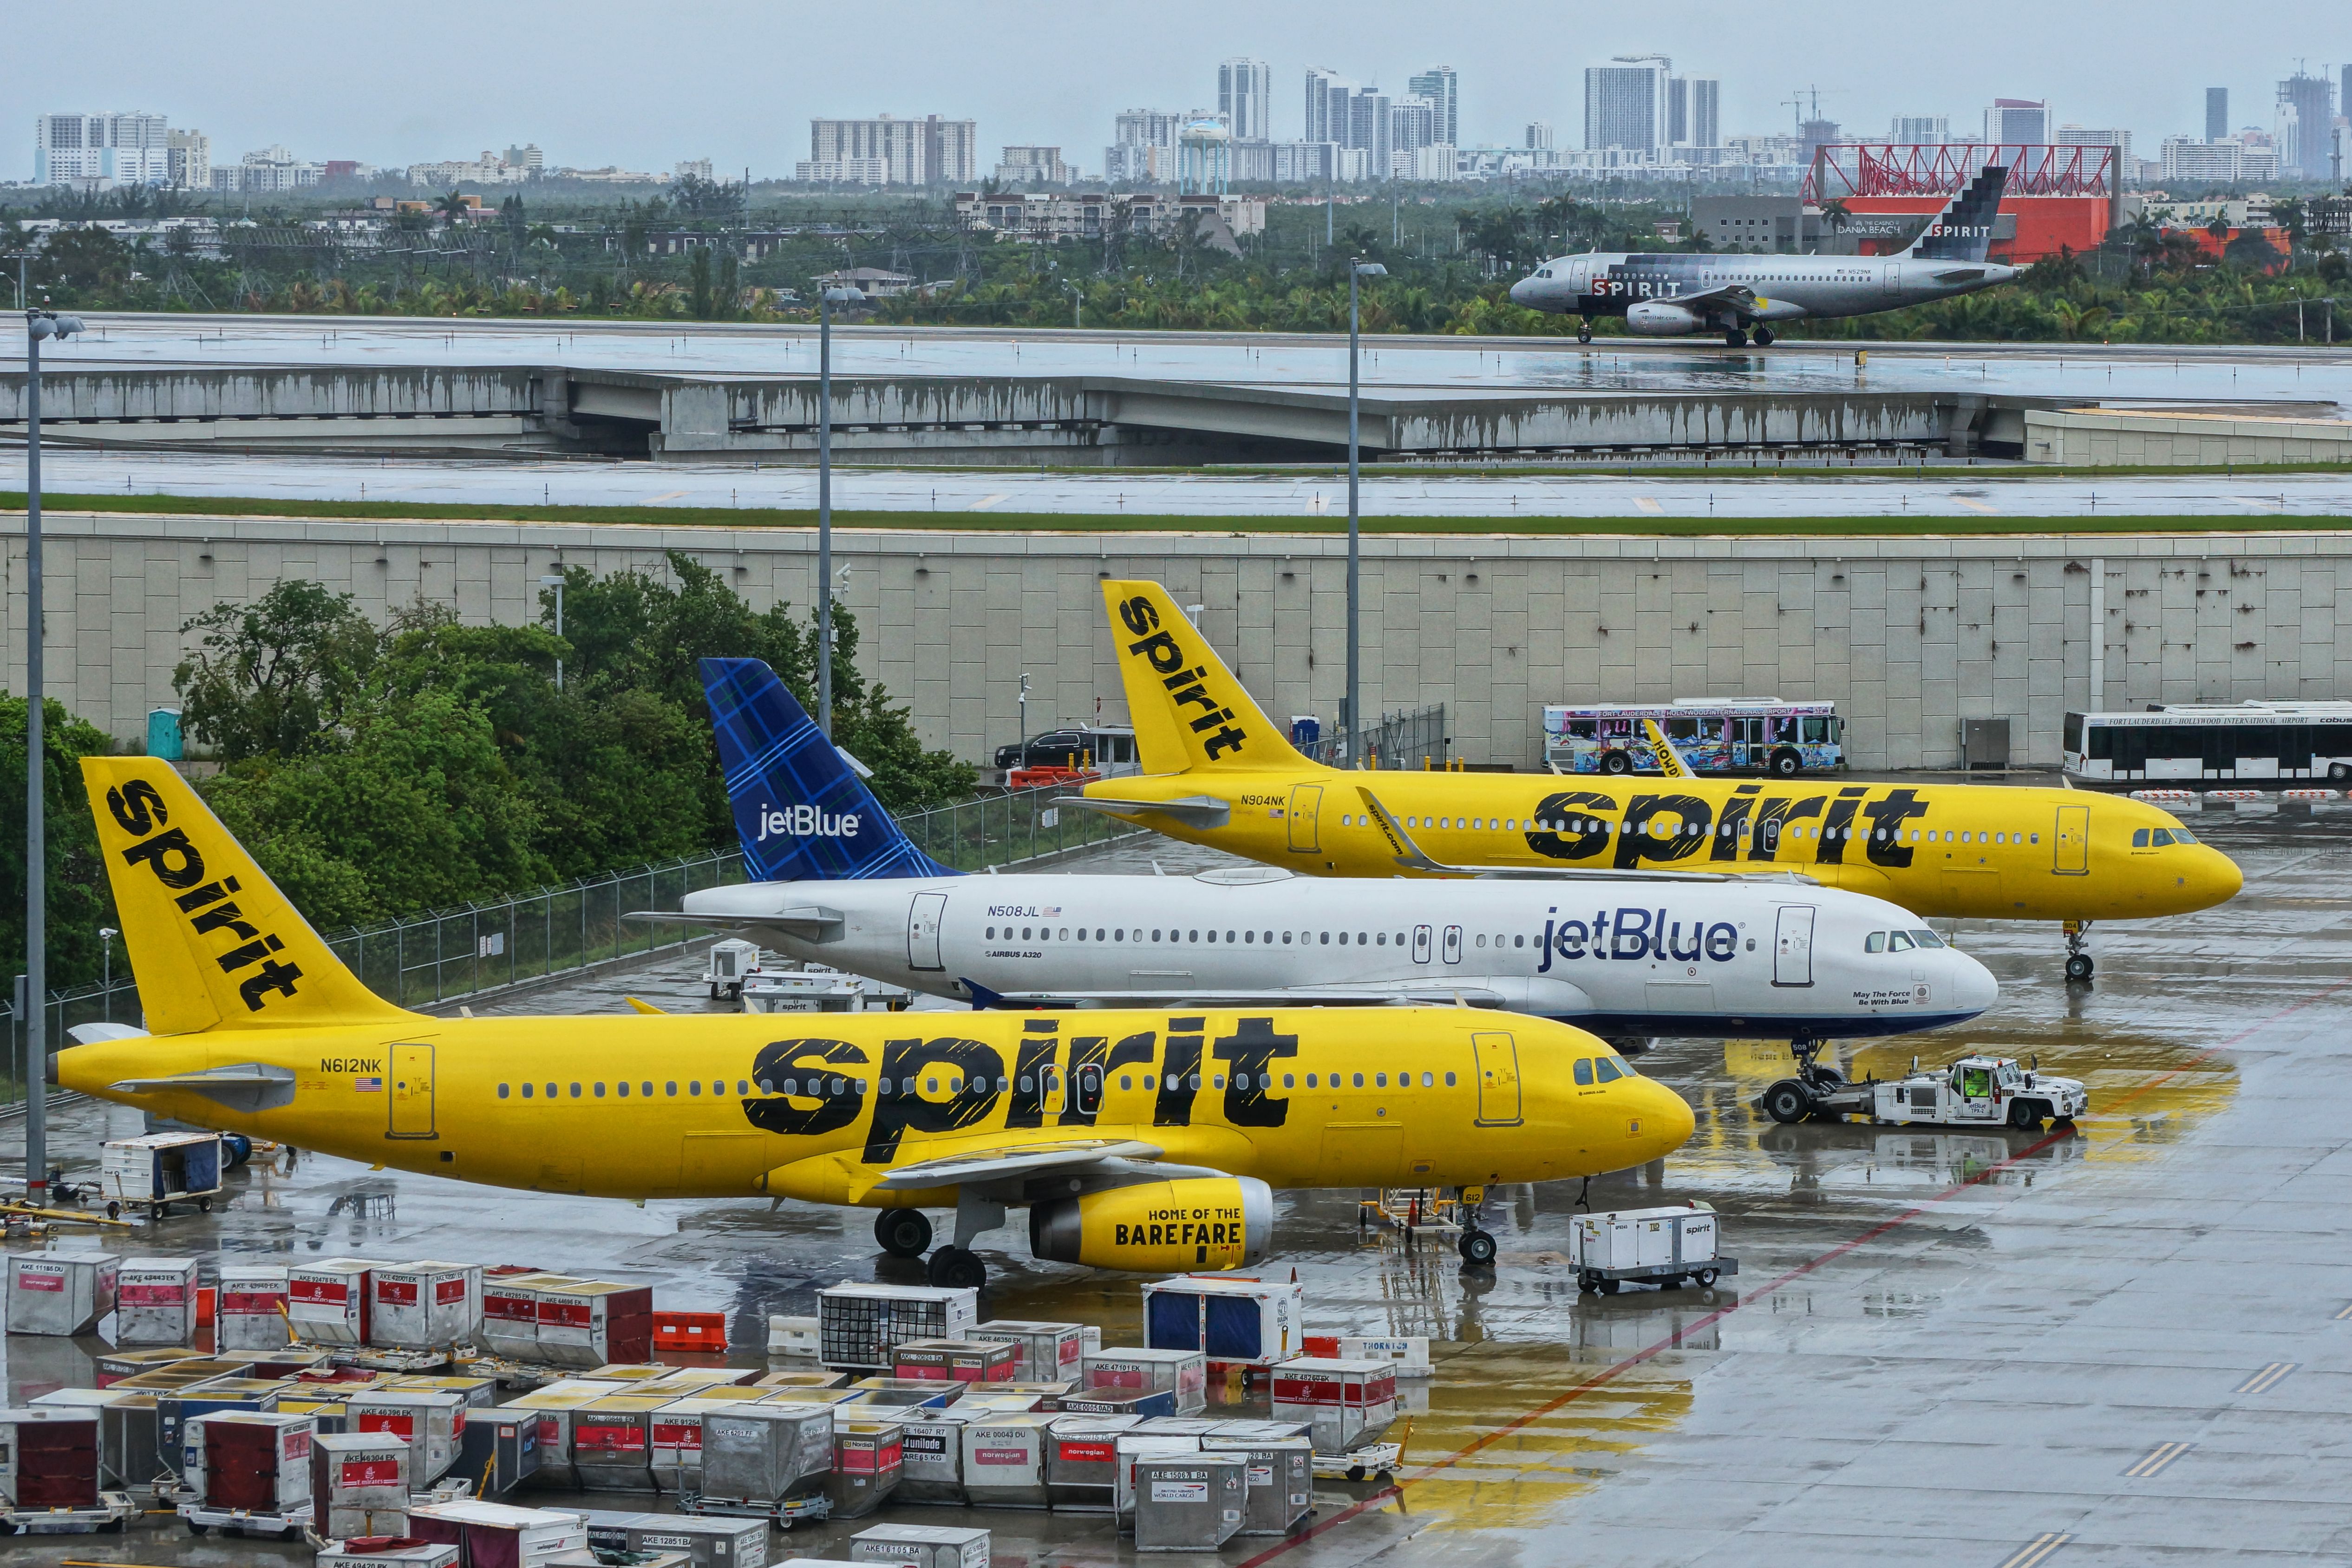 A jetBlue aircraft parked between two Spirit Airilnes aircraft on an airport apron.